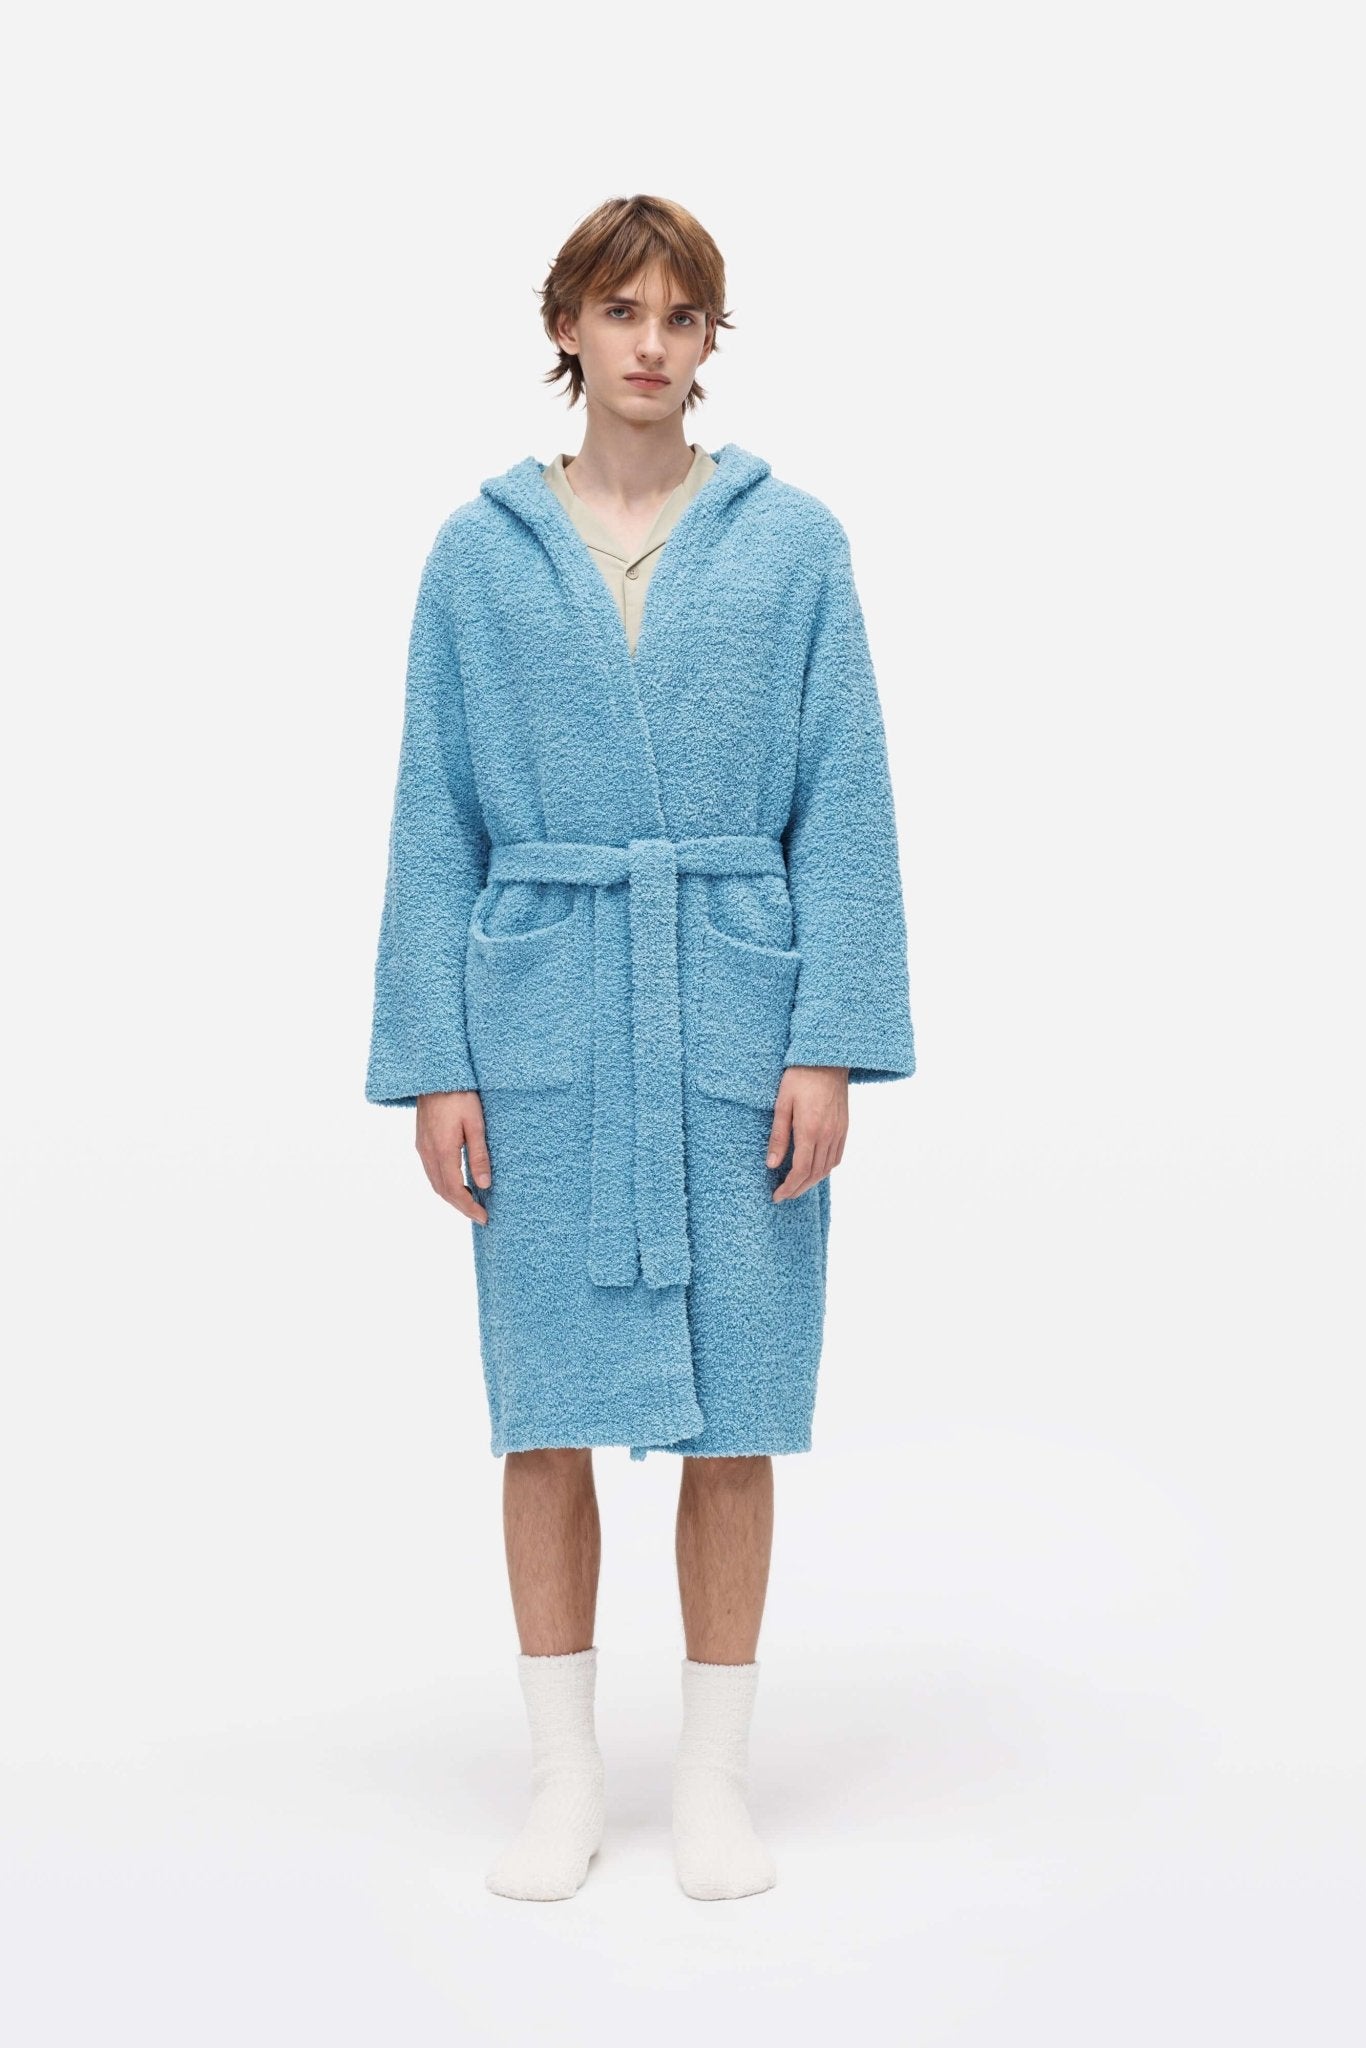 Aqua Blue Hooded Plush Bathrobe - Robe - Touchofgod.co